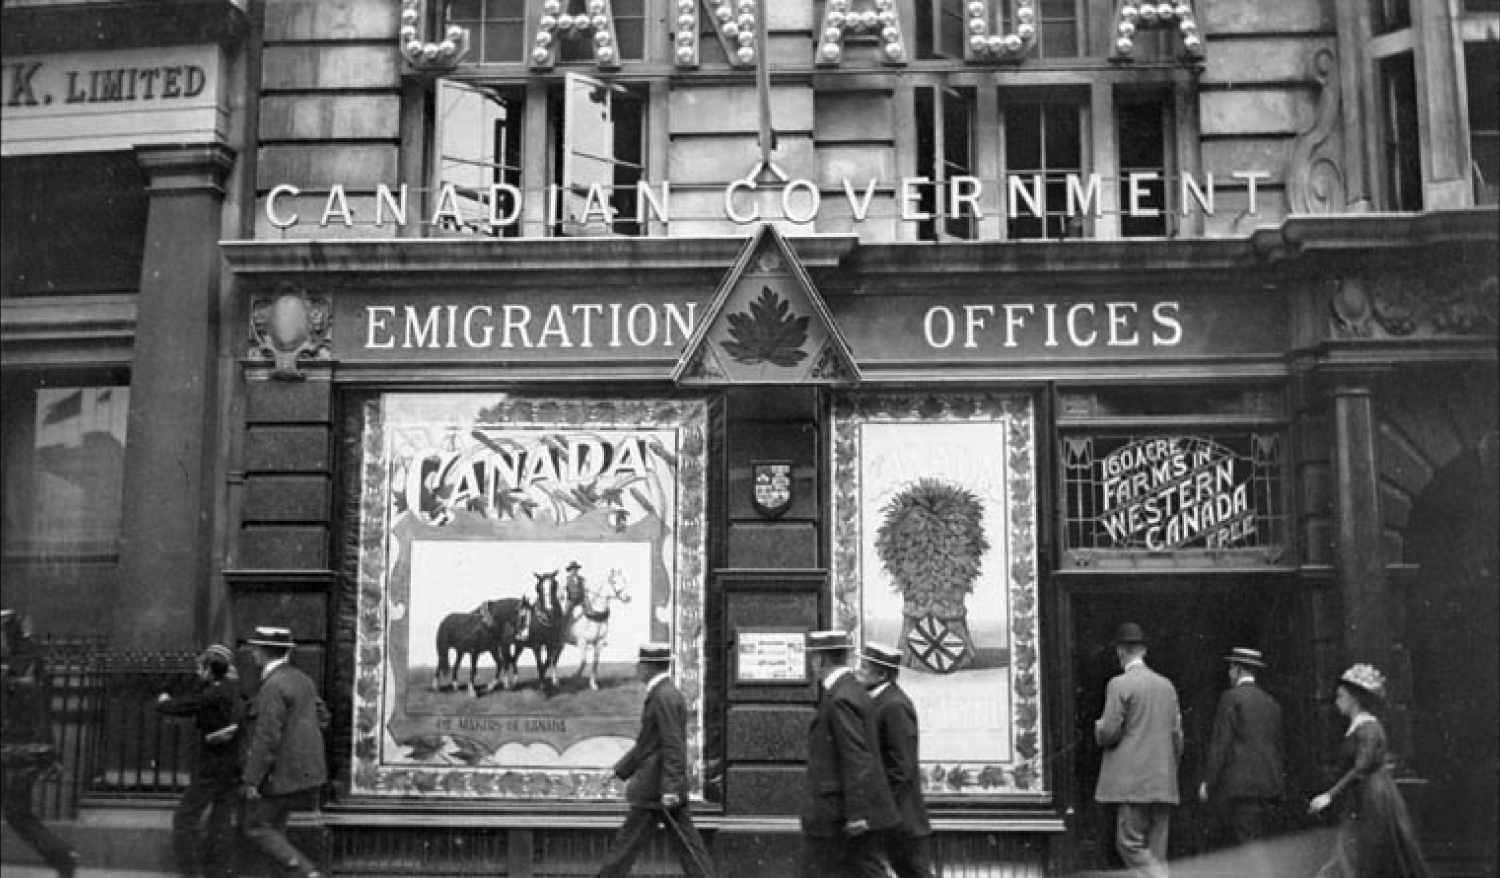 Messrs. Krag & Dawson entering Canadian Emigration Offices, 11-12 Charing Cross, London, England.